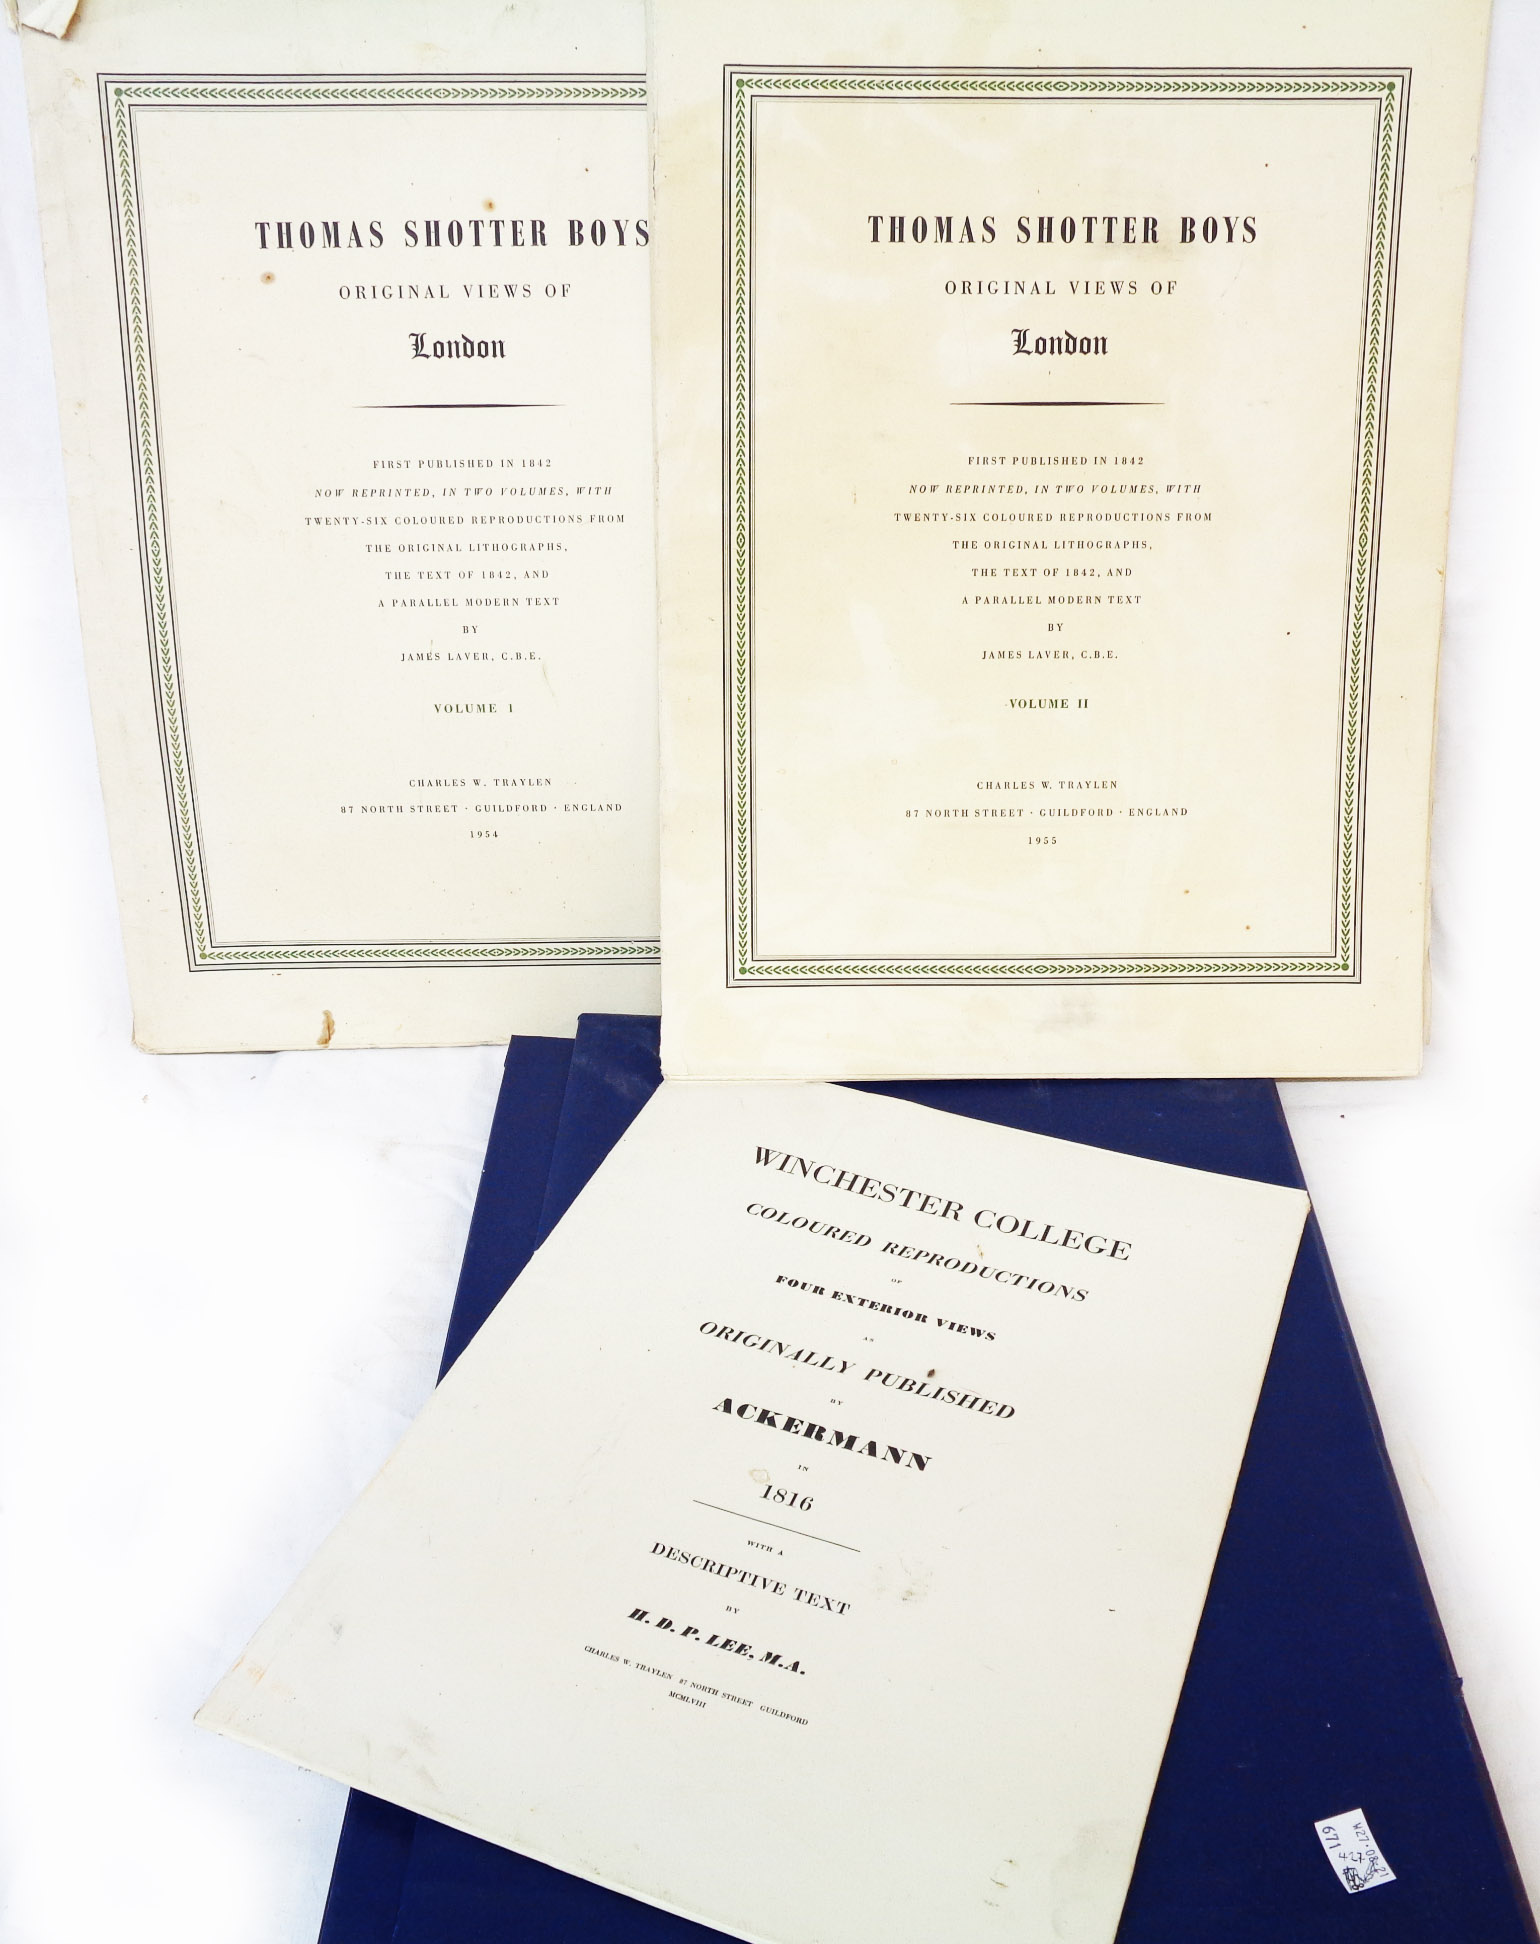 A blue folio containing Thomas Shotter Boys Original Views of London Volume I 1954 and Volume II